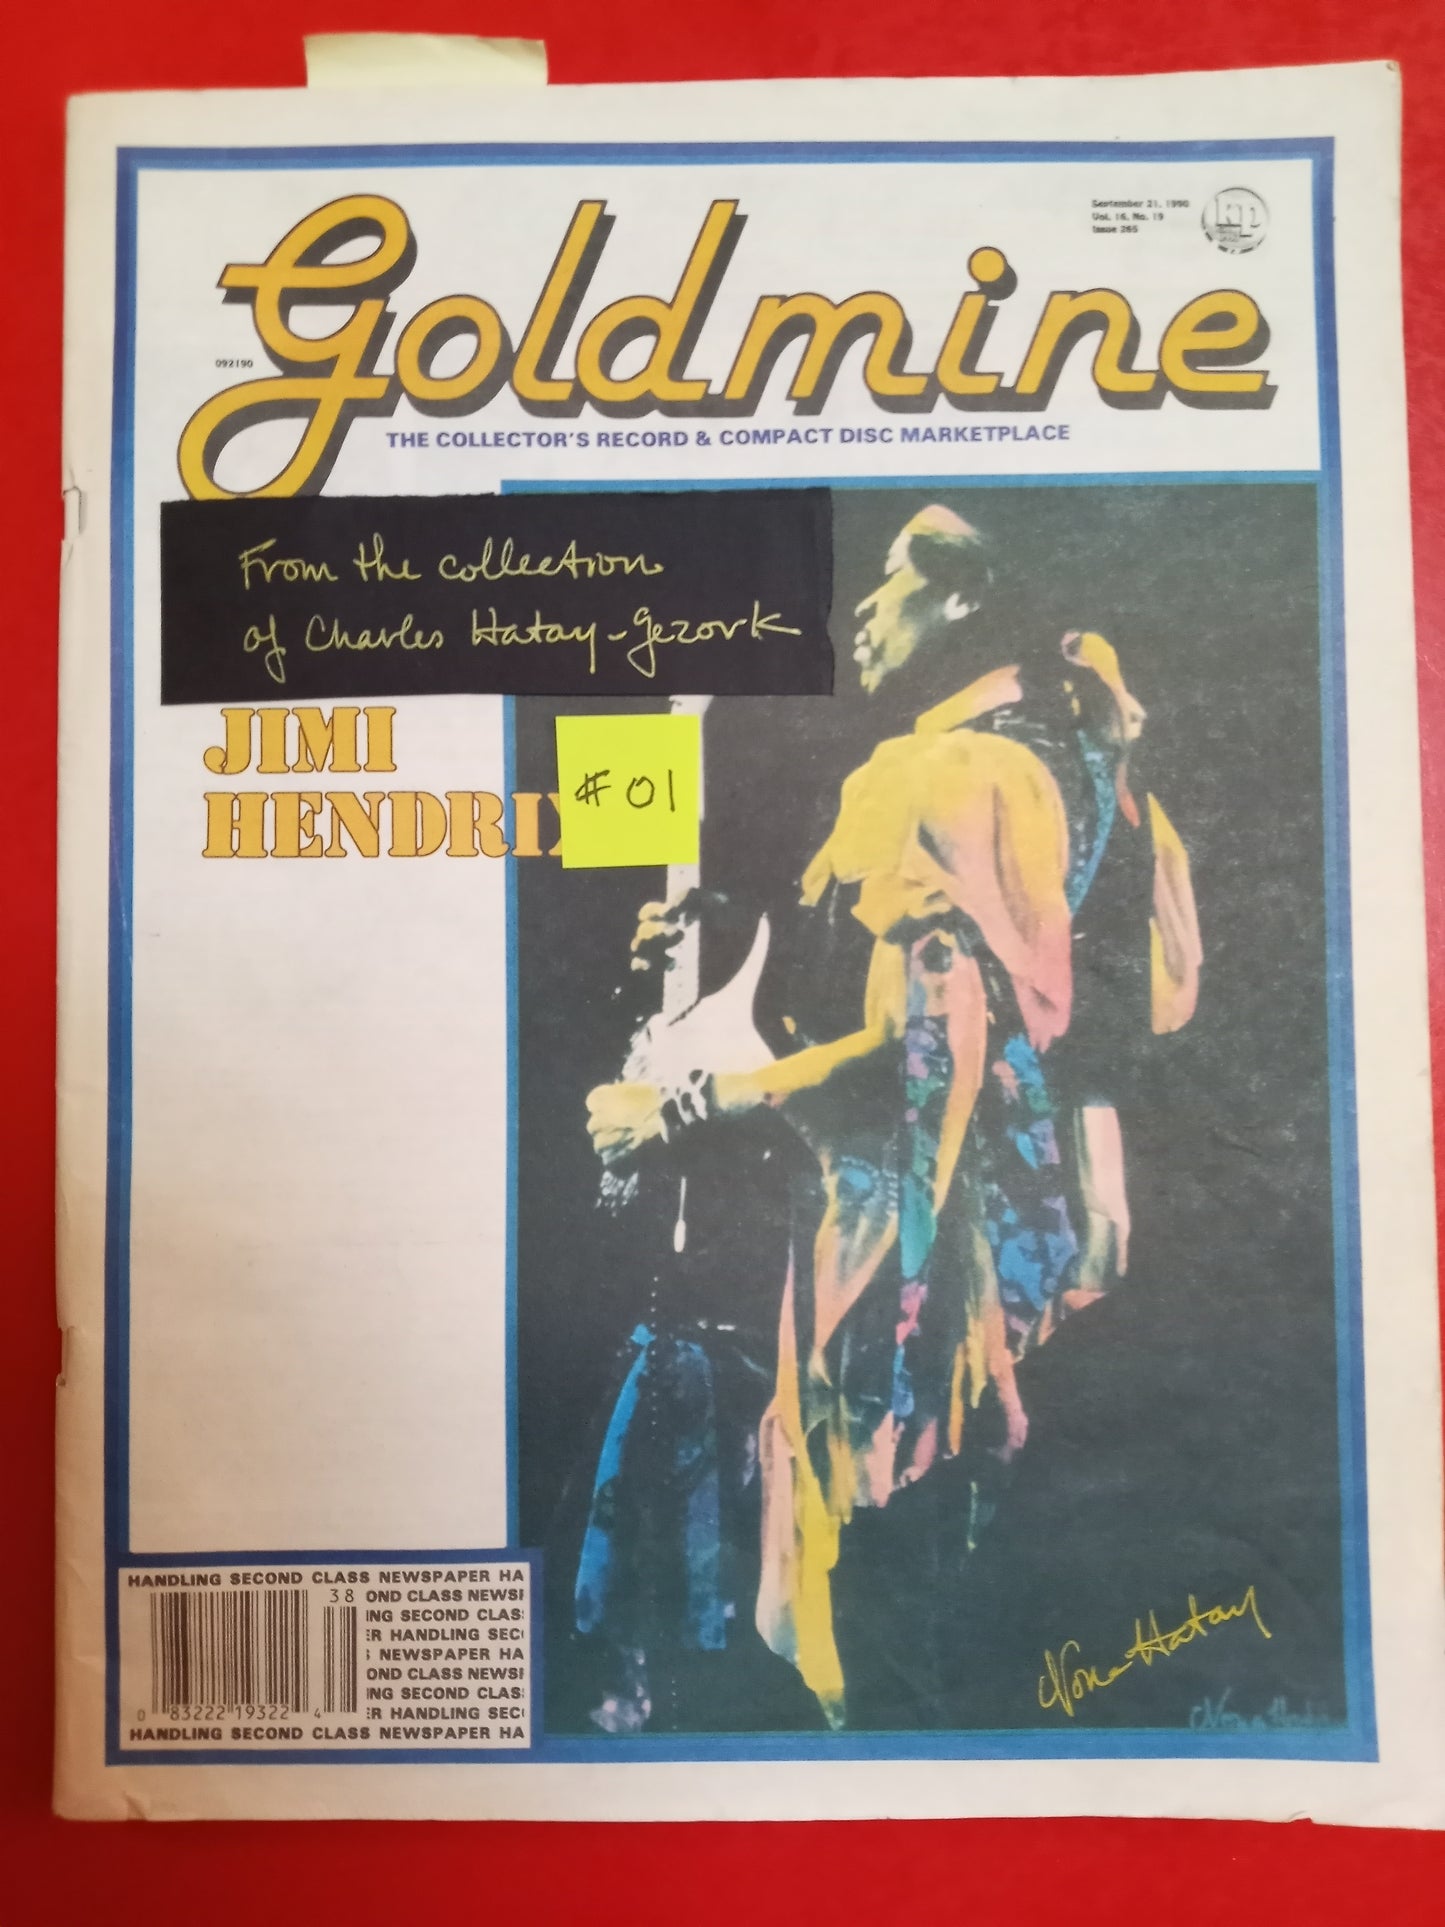 Goldmine - Jimi Hendrix